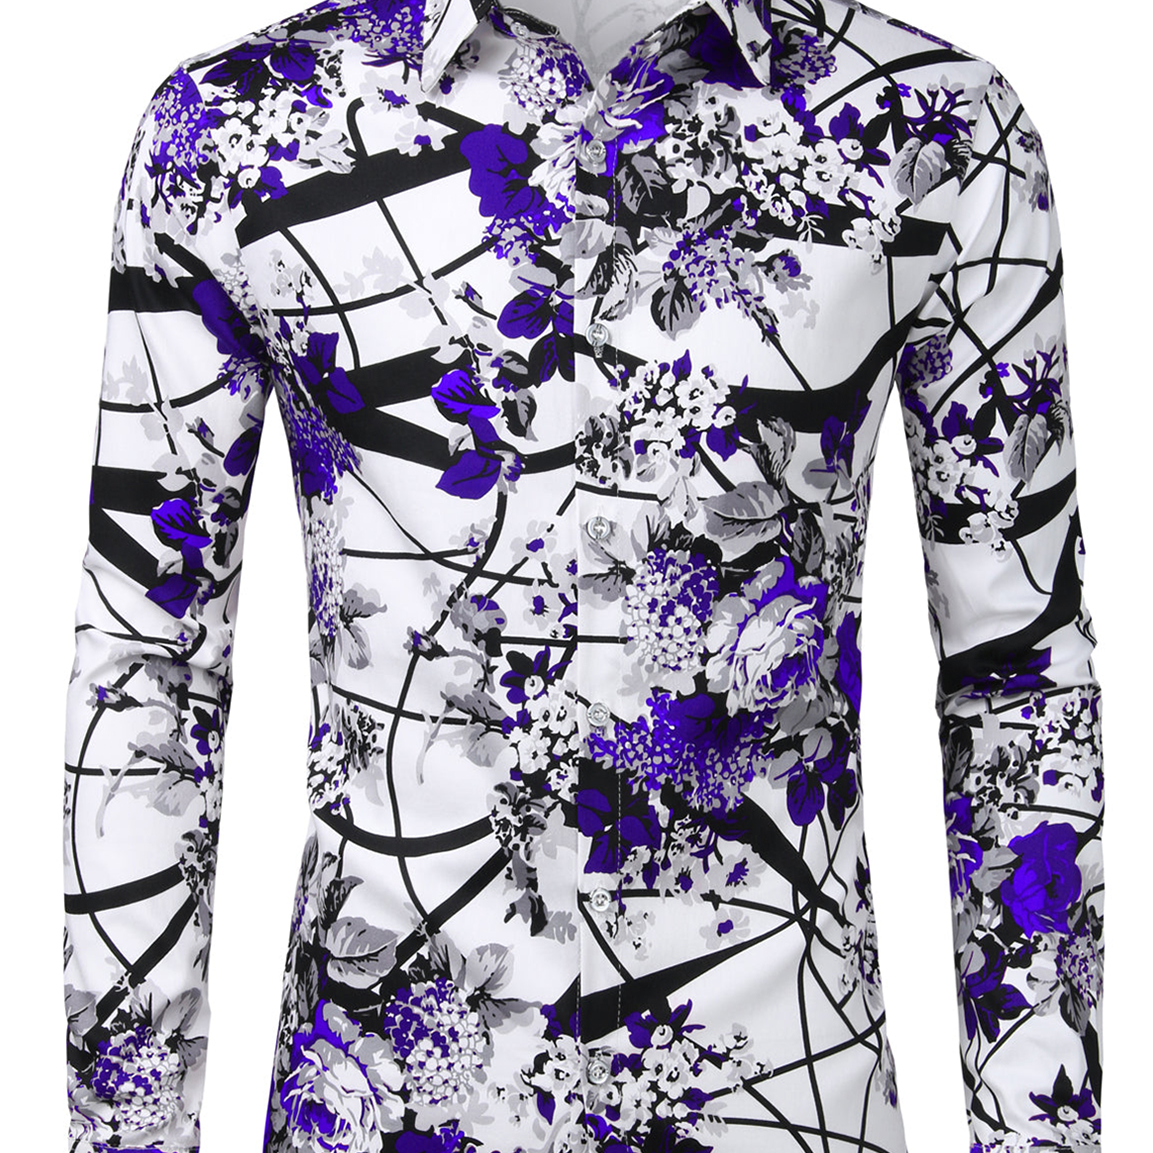 Men's Floral Print Cotton Casual Button Down Long Sleeve Shirt